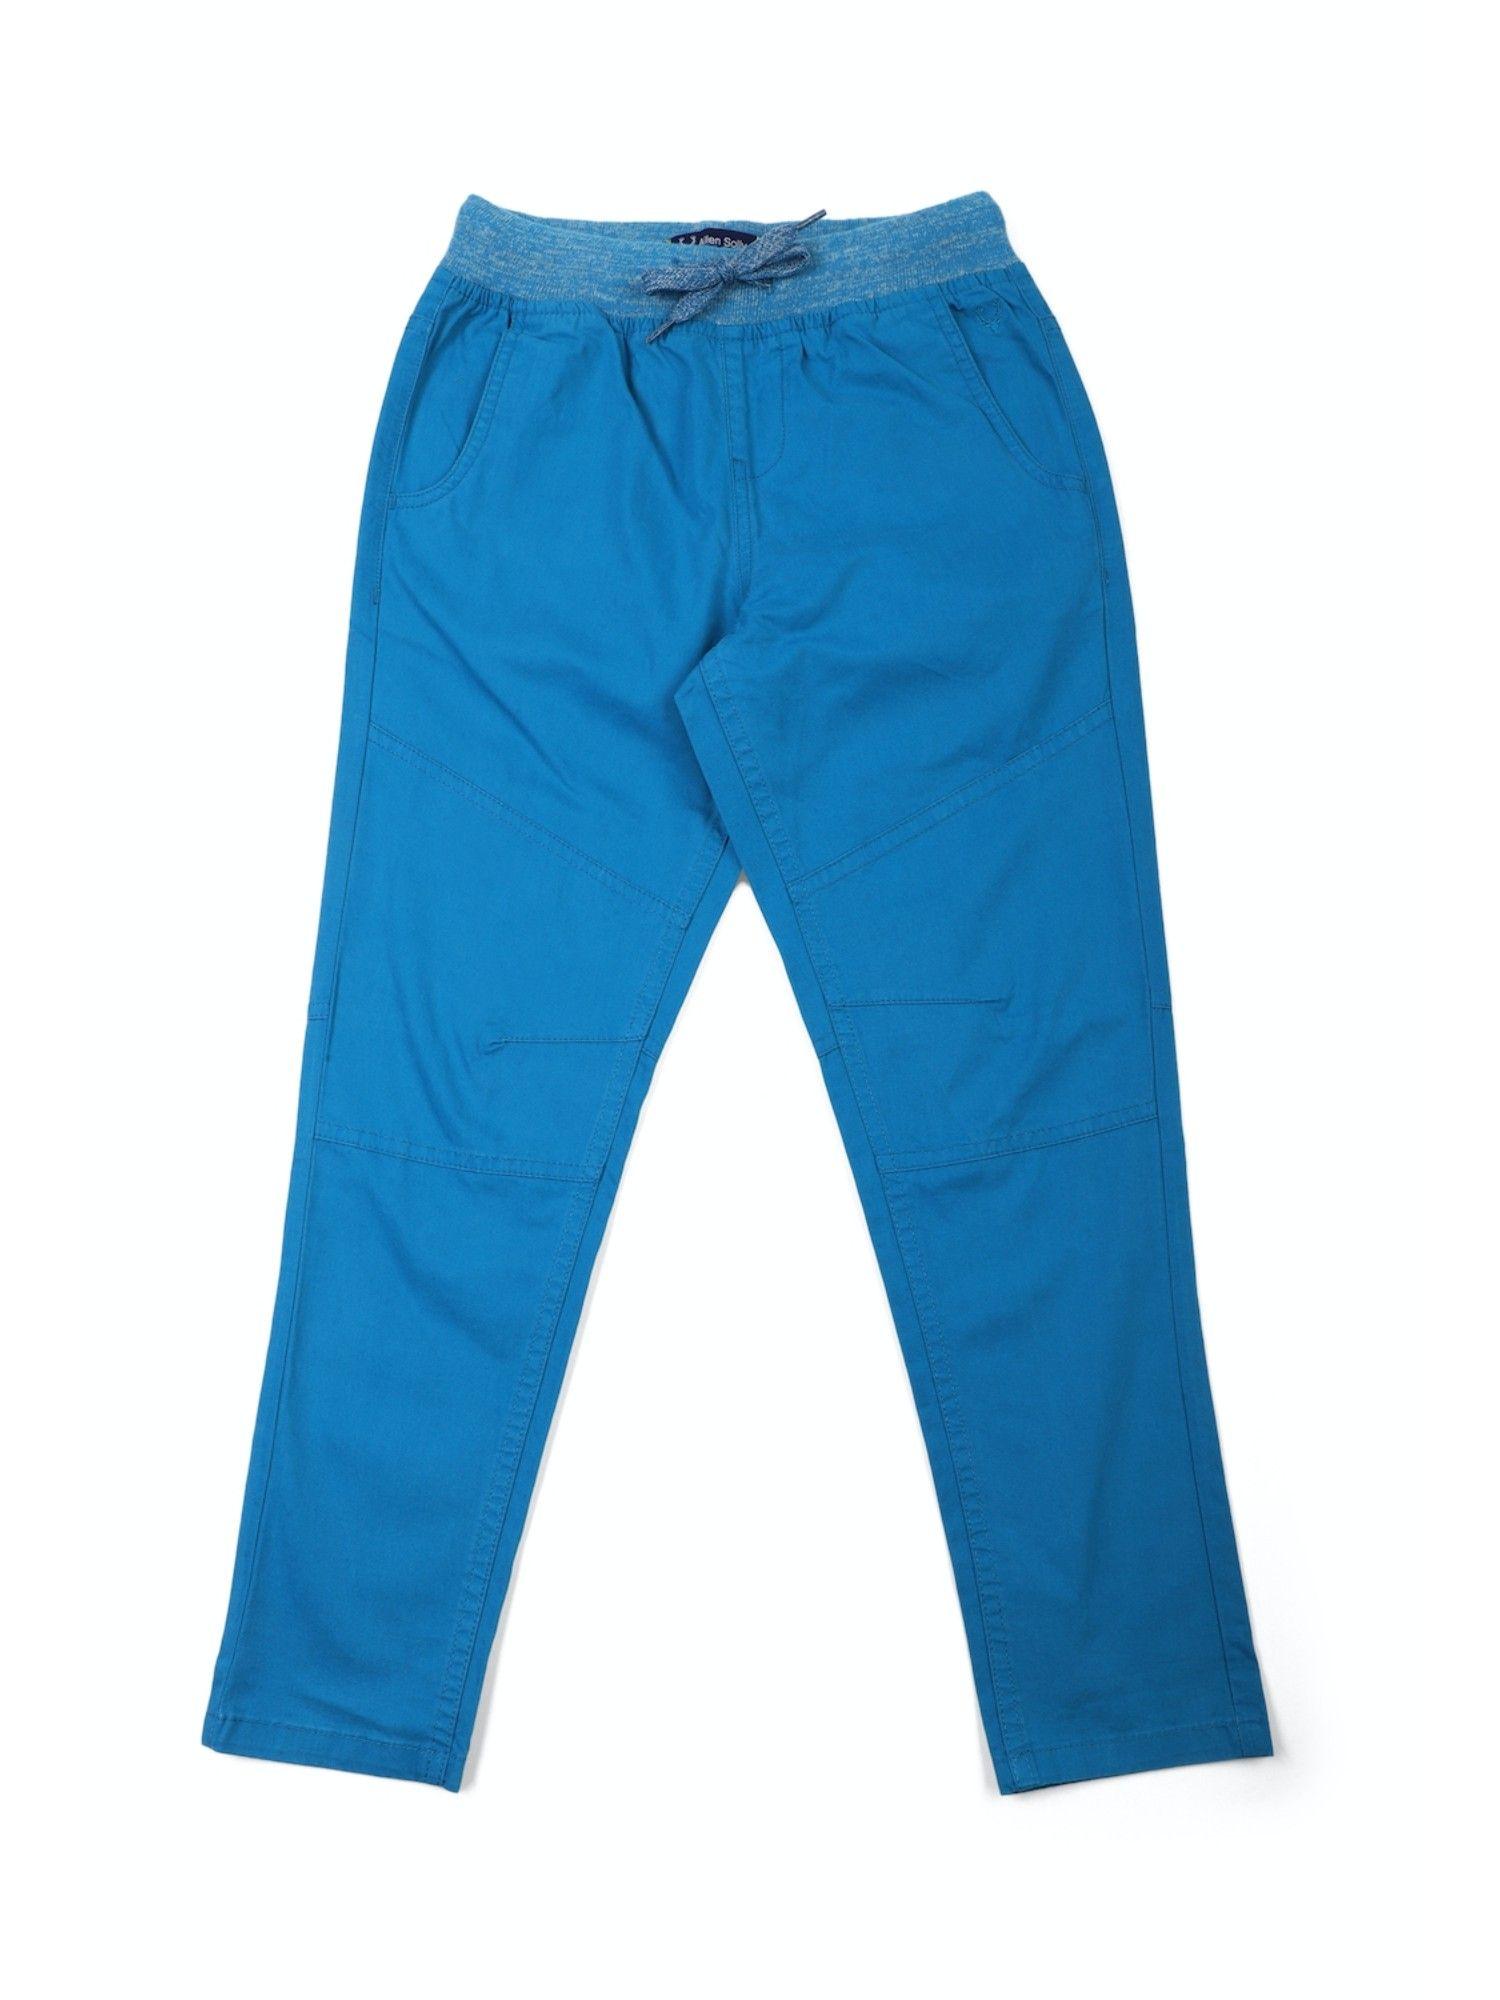 Boys Blue Plain Trousers